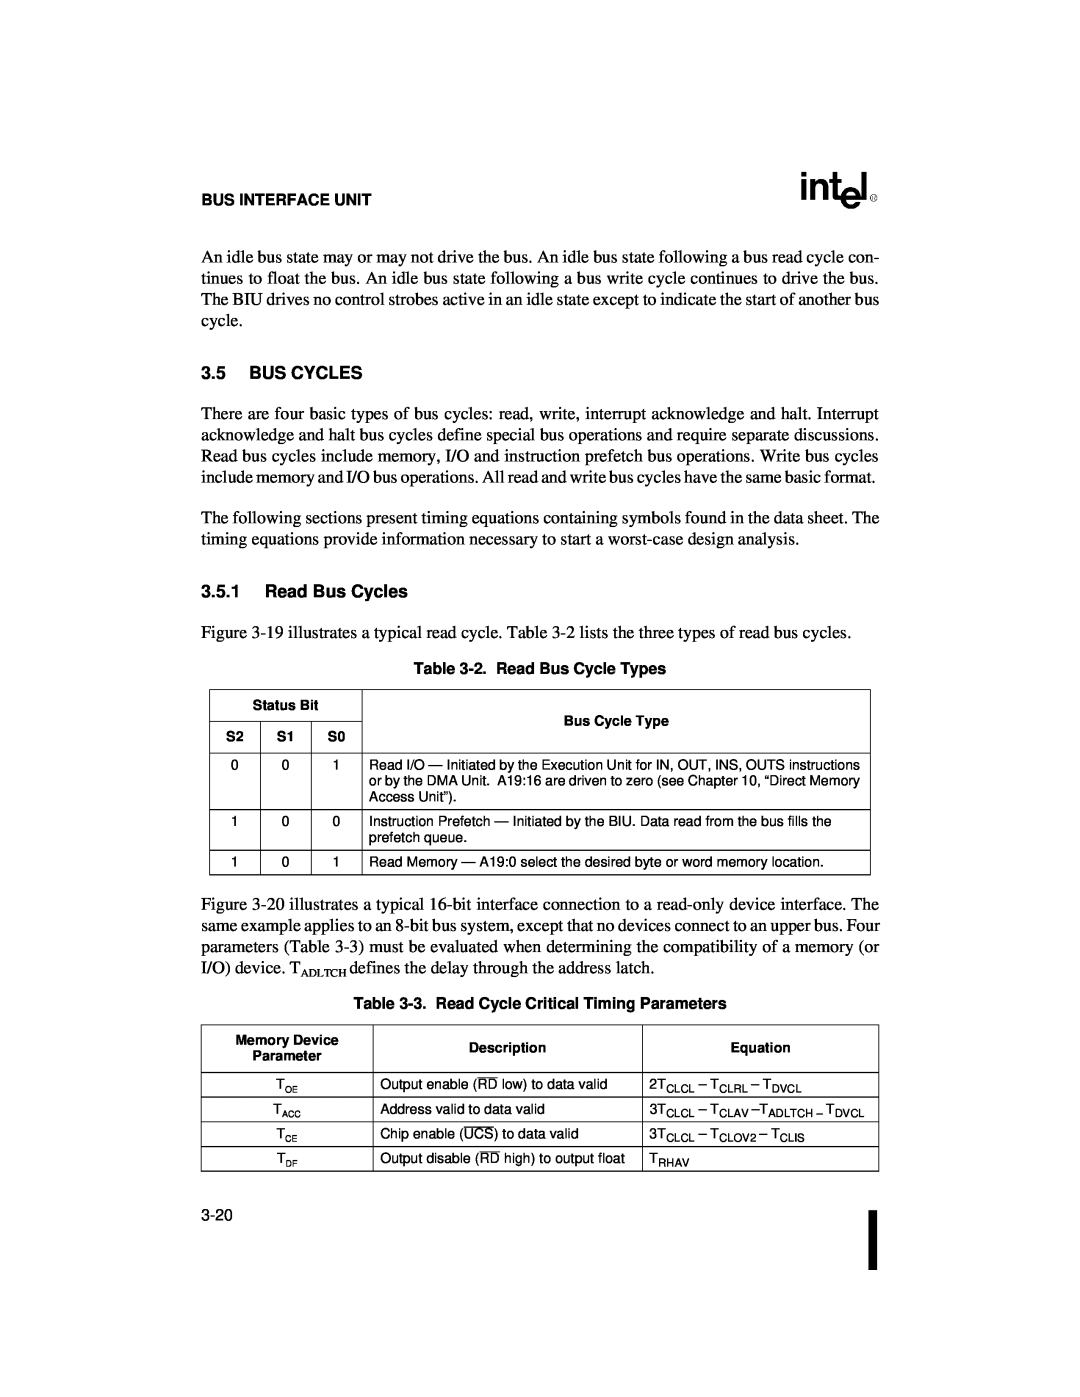 Intel 80C186XL, 80C188XL user manual 3.5BUS CYCLES, 3.5.1Read Bus Cycles, Bus Interface Unit, 2. Read Bus Cycle Types 